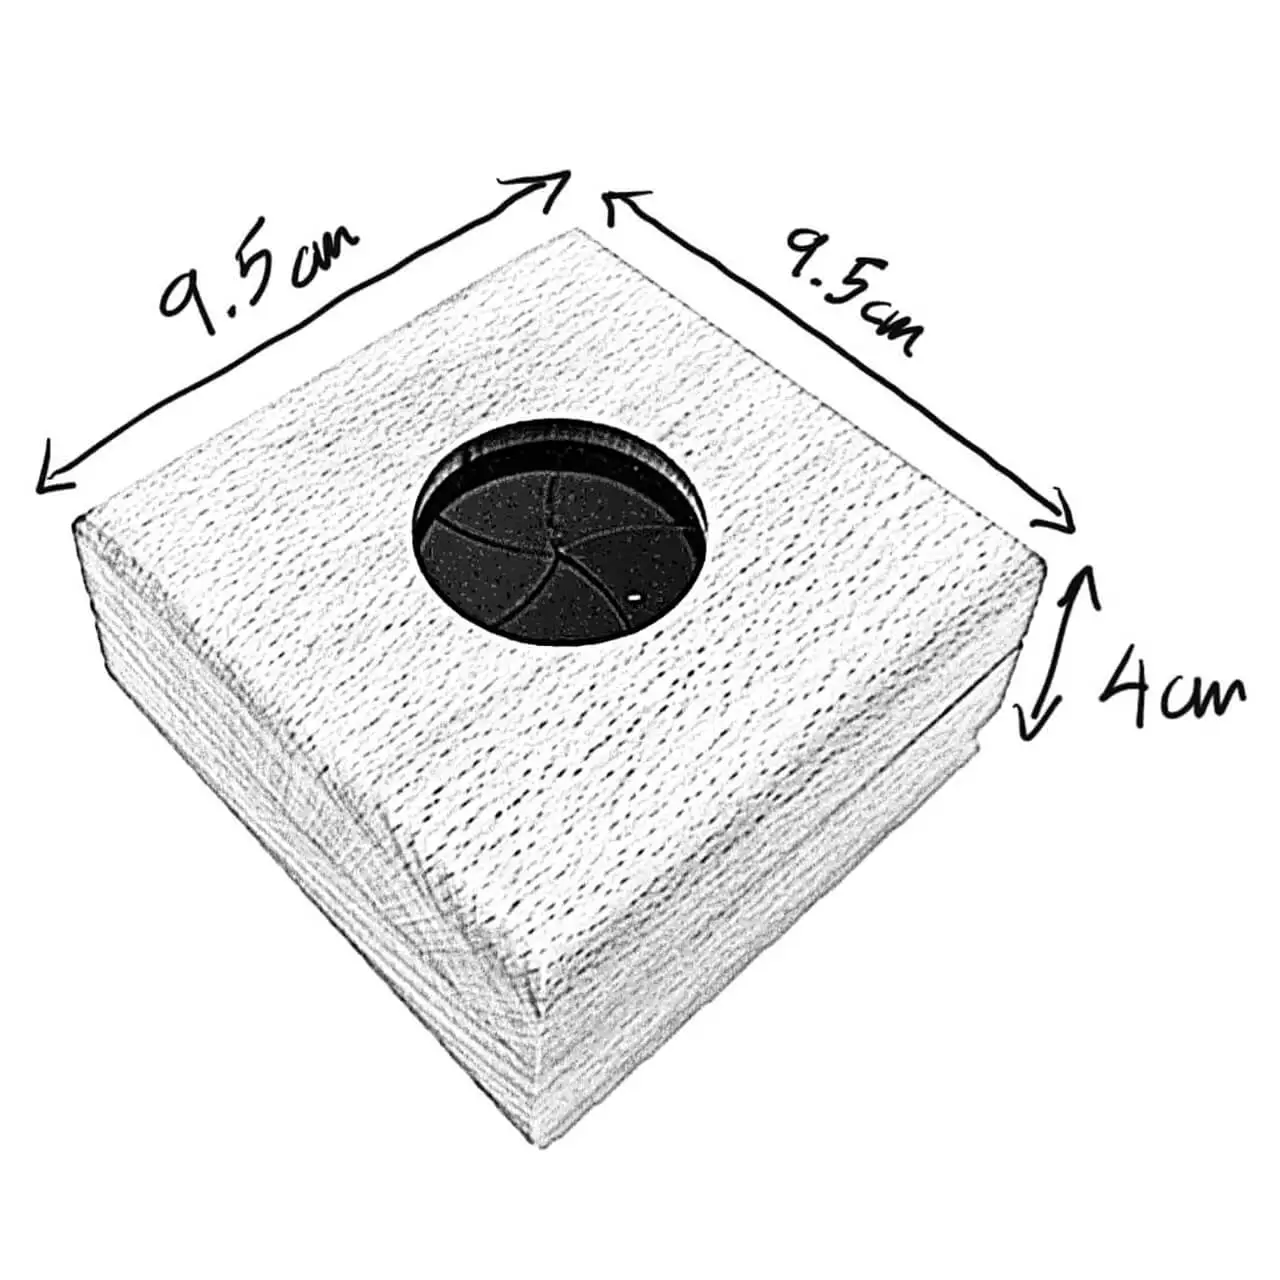 mason ring box dimensions